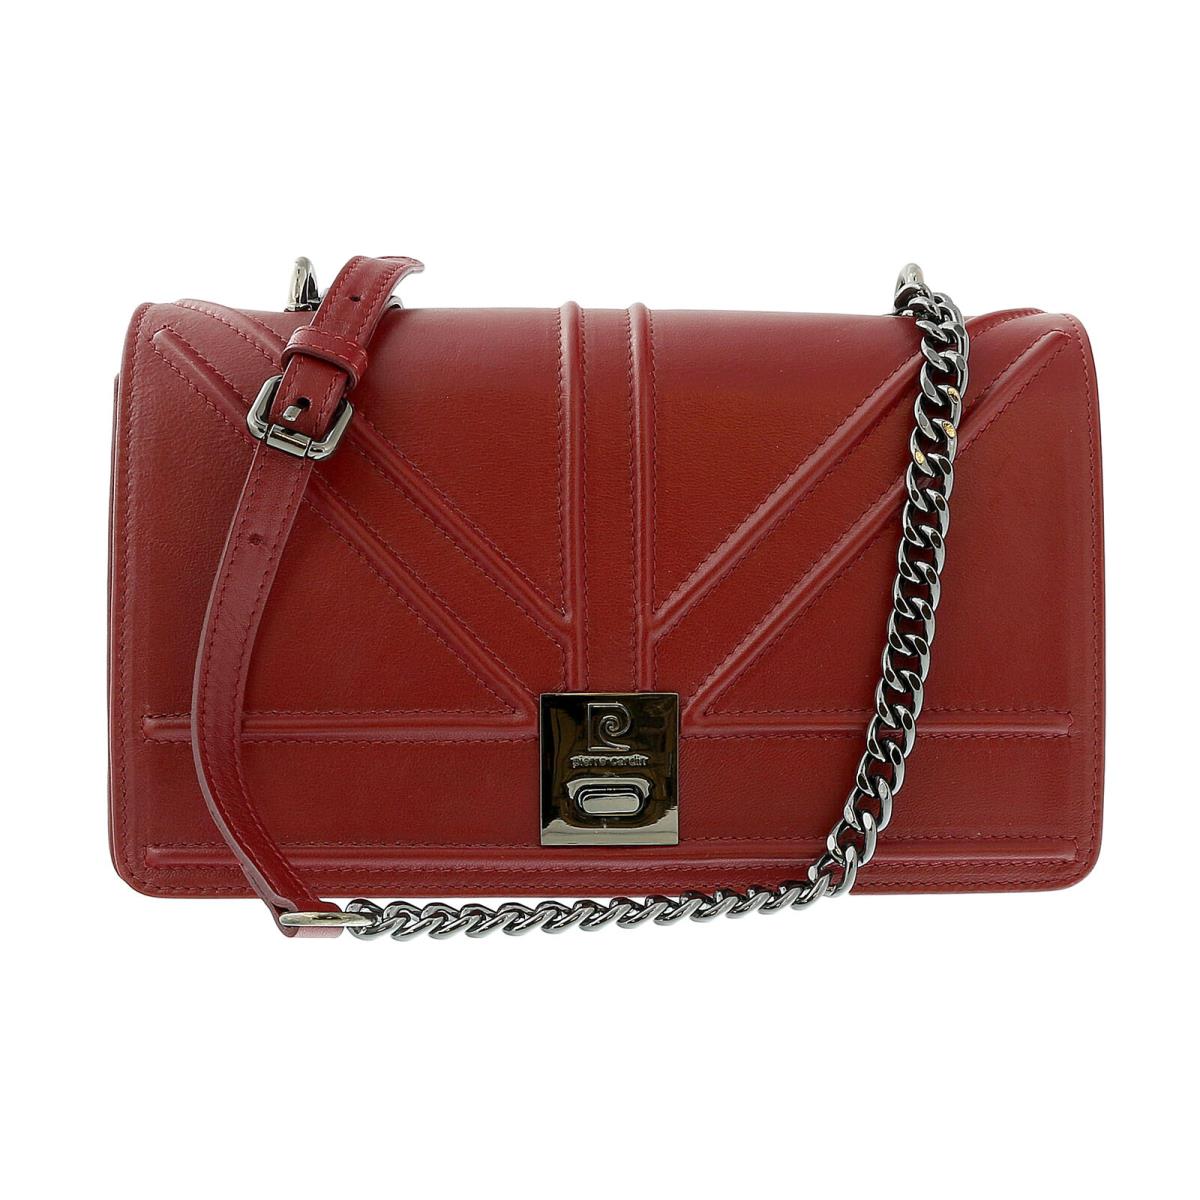 Pierre Cardin Burgundy Leather Small Structured Shoulder Bag